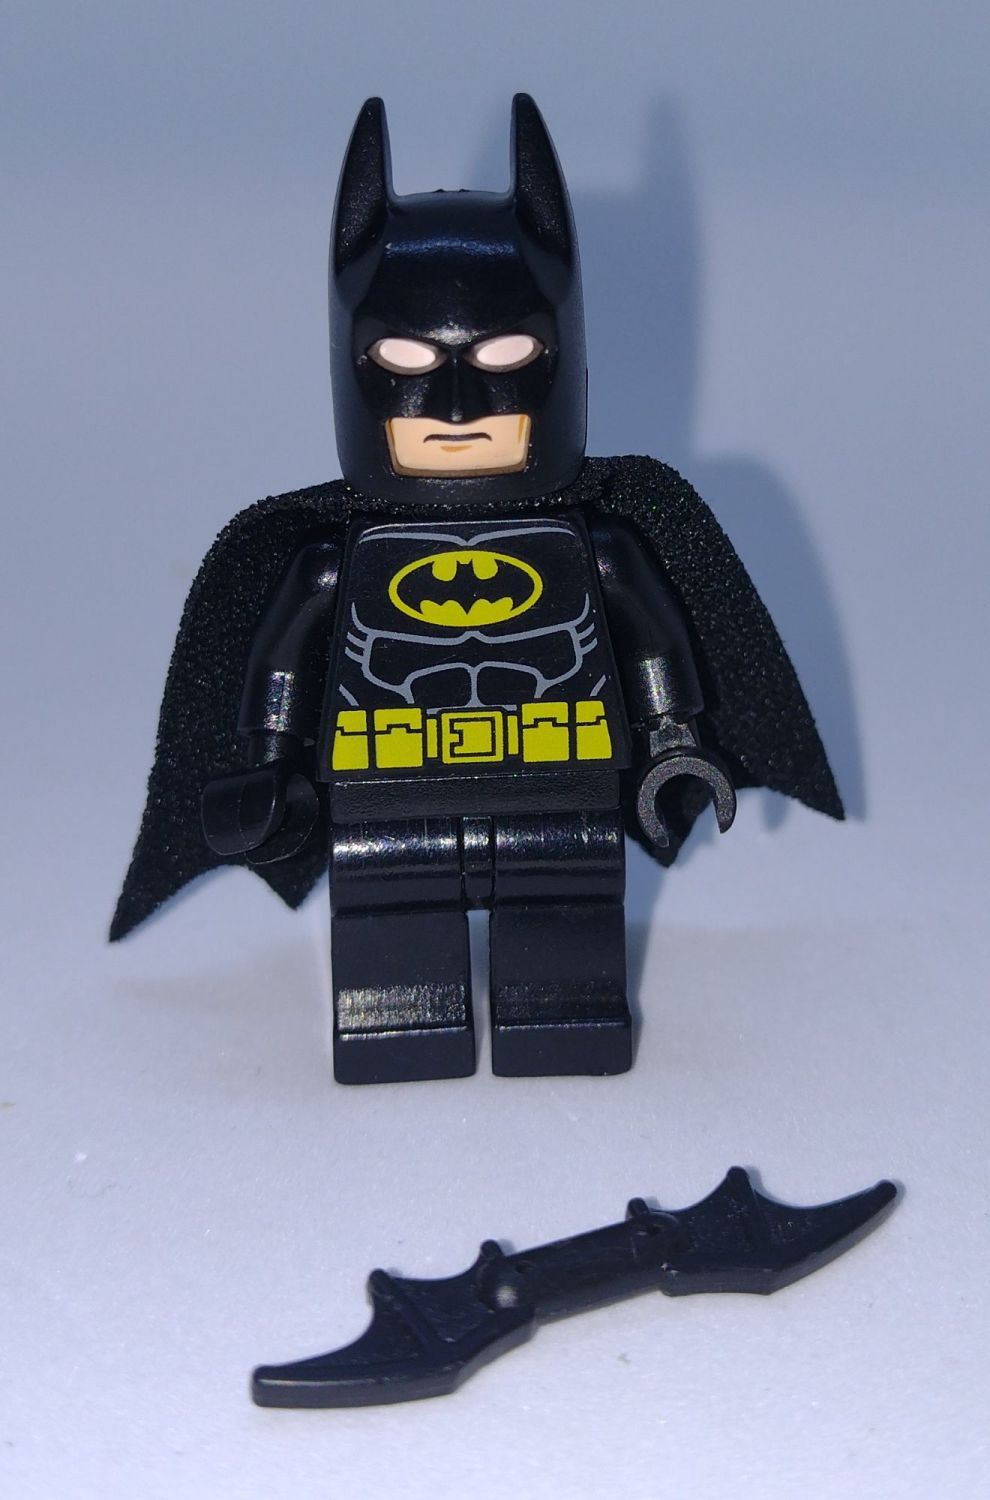 Lego Minifigure - Batman - SH016A - From Set 76013